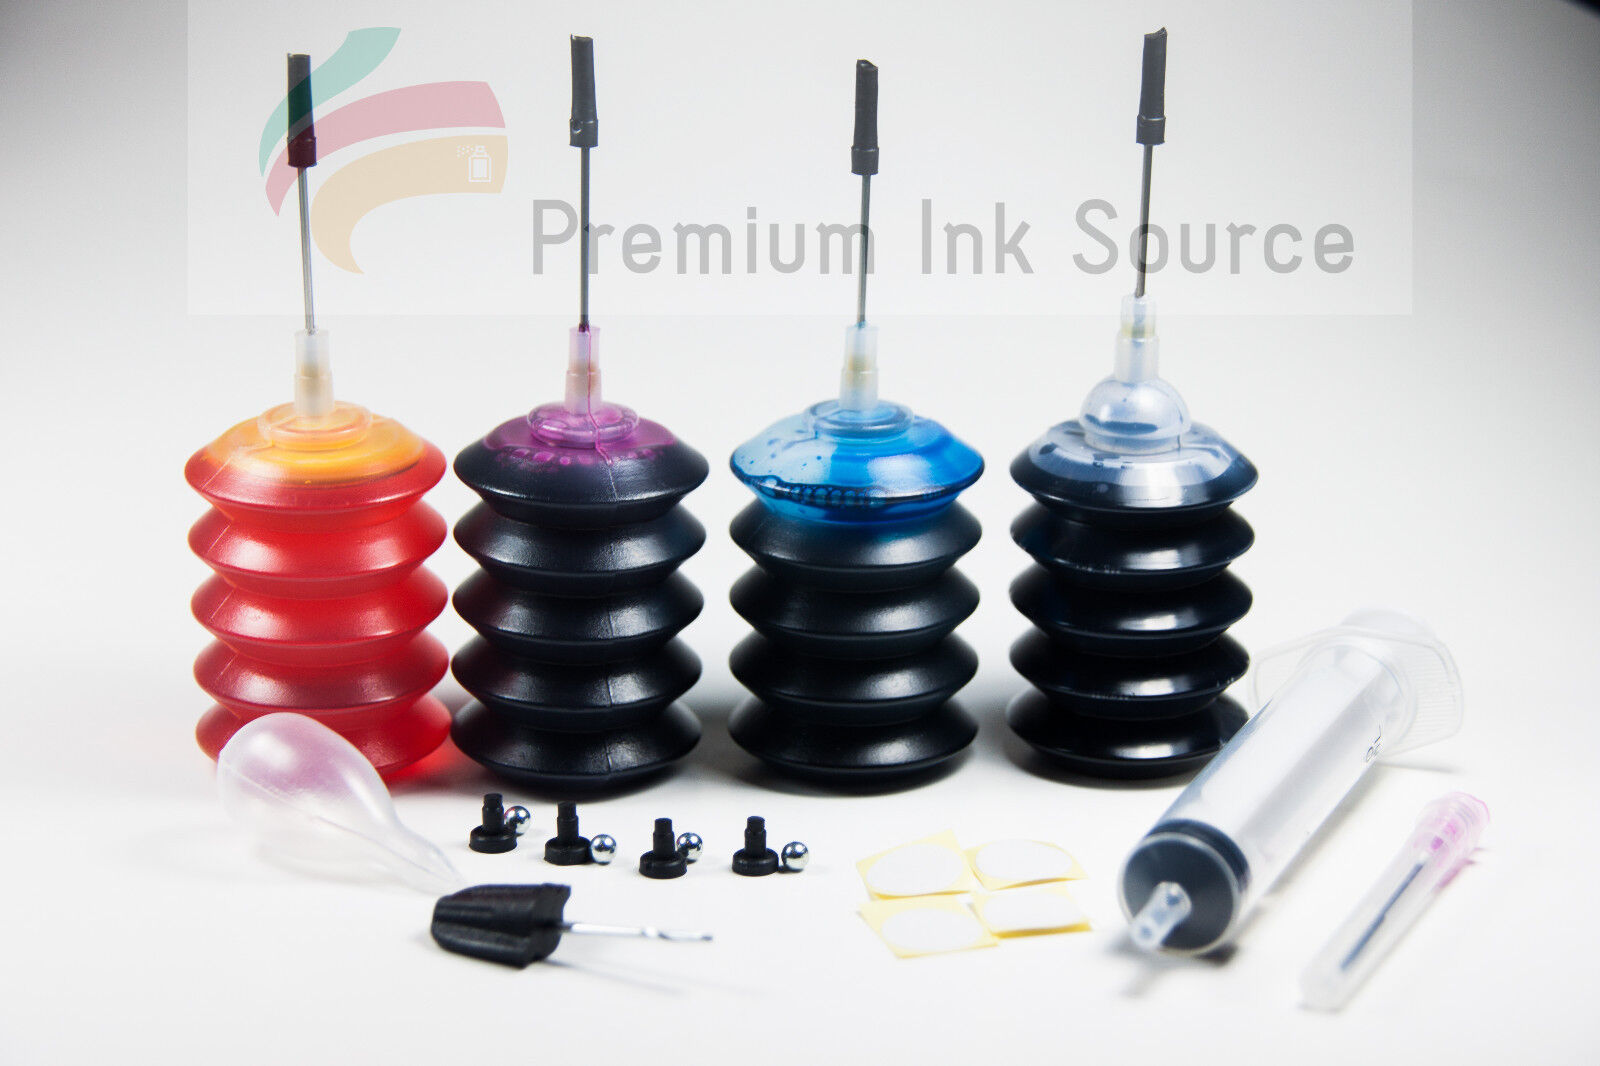 4x30ml Premium Universal Bulk Ink Refill Kit for HP Printer Cartridges